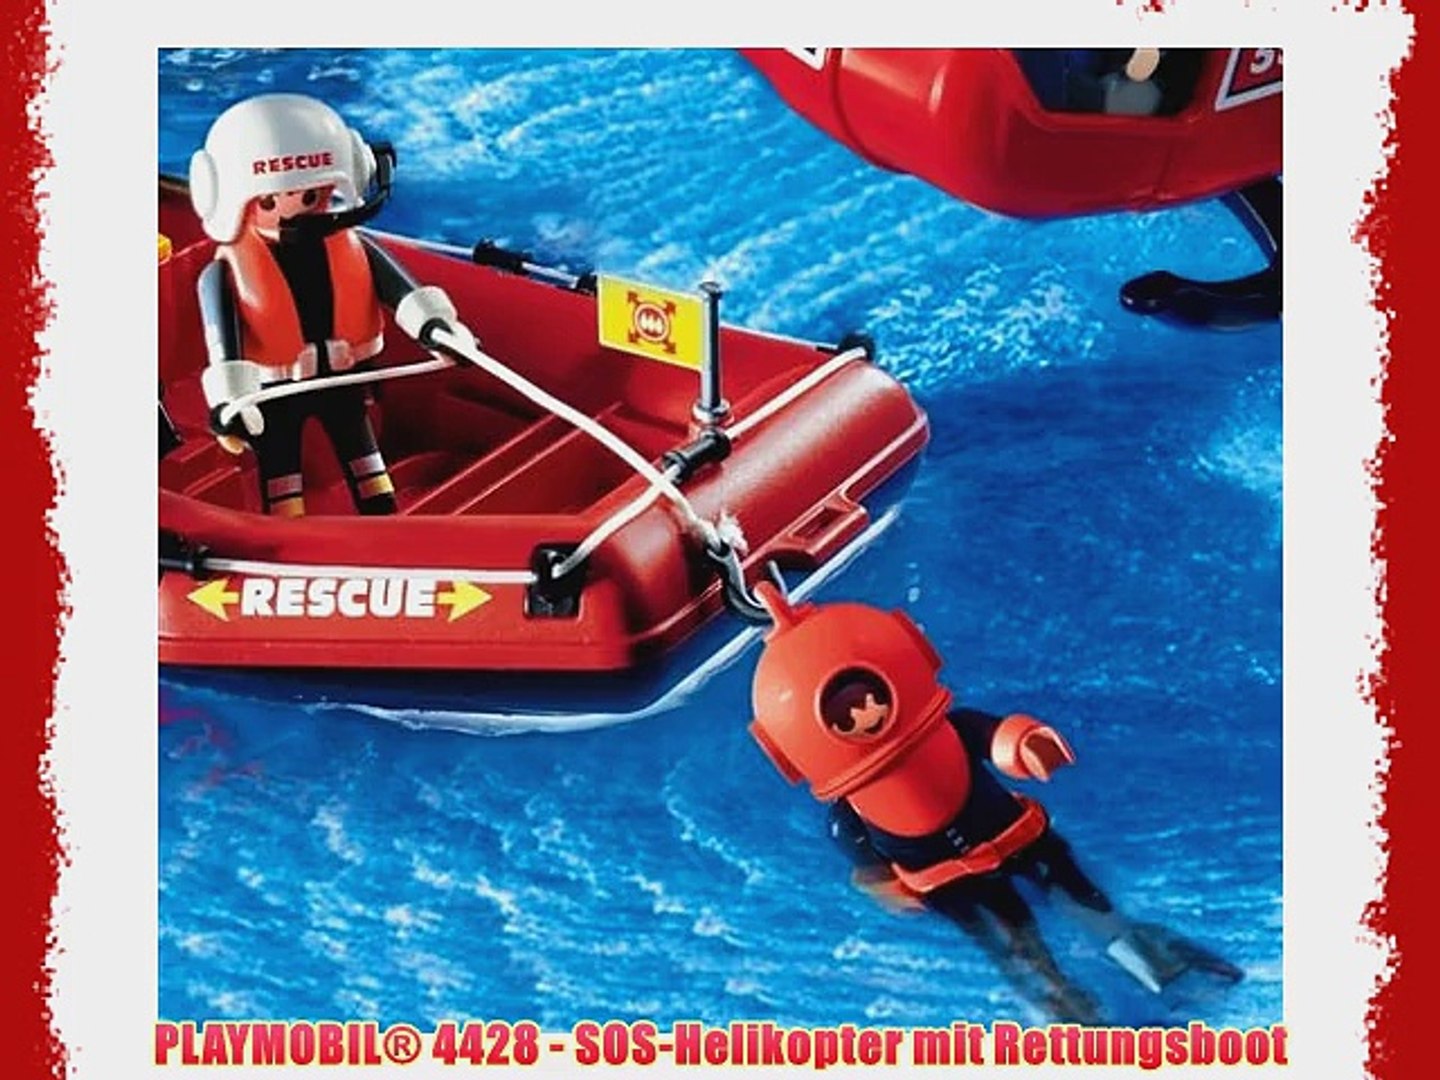 PLAYMOBIL? 4428 - SOS-Helikopter mit Rettungsboot - video Dailymotion